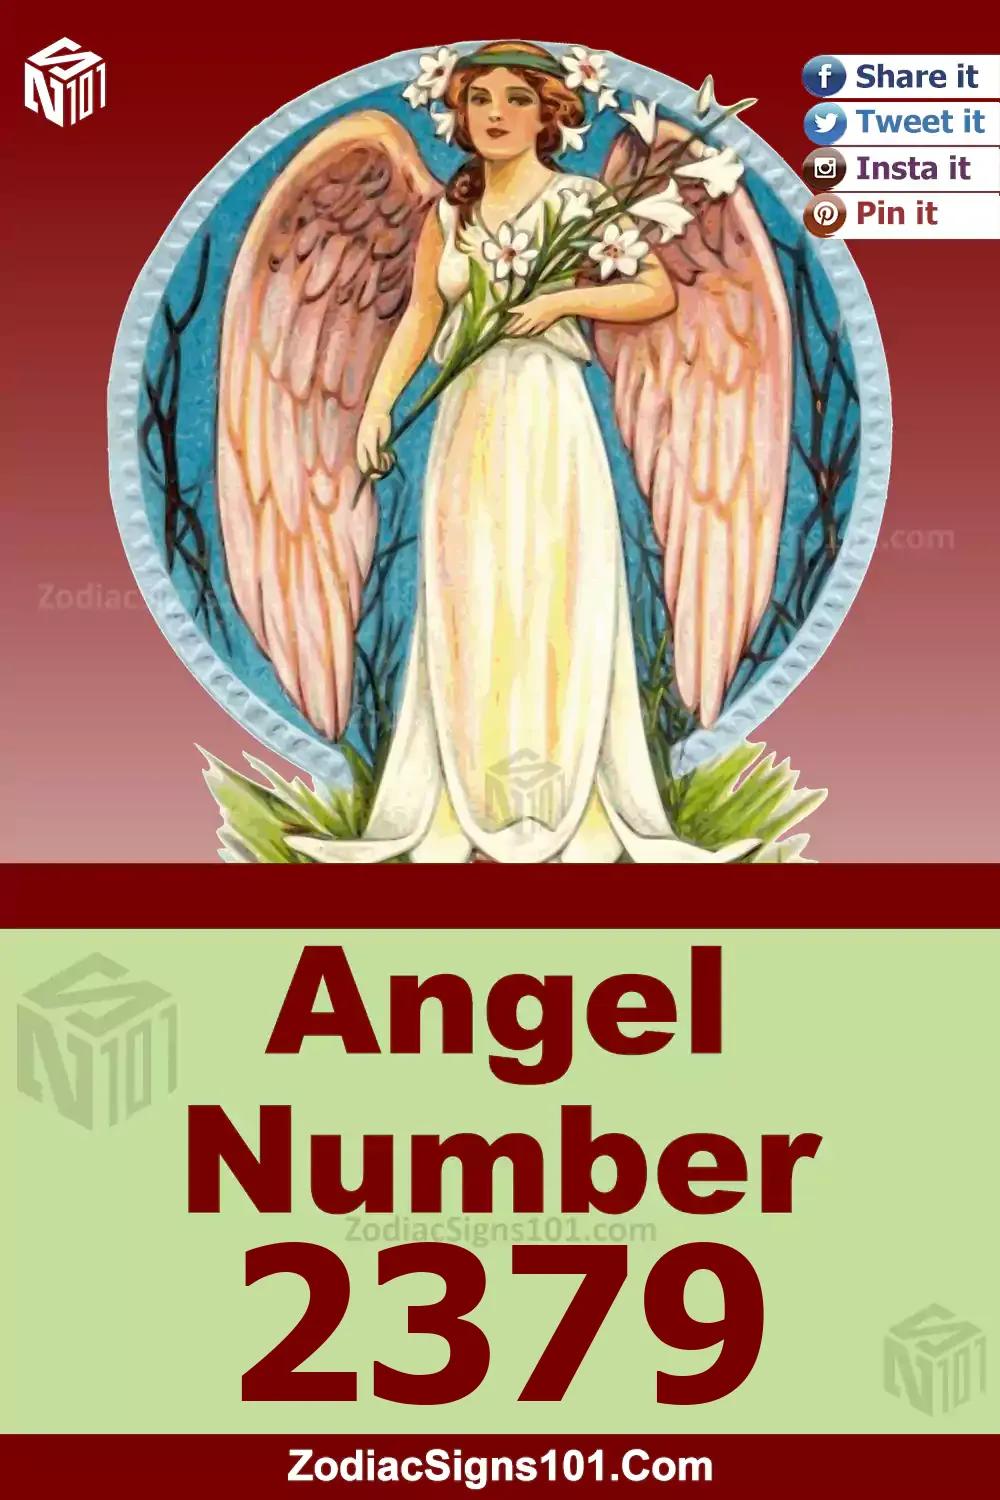 2379-Angel-Number-Meaning.jpg